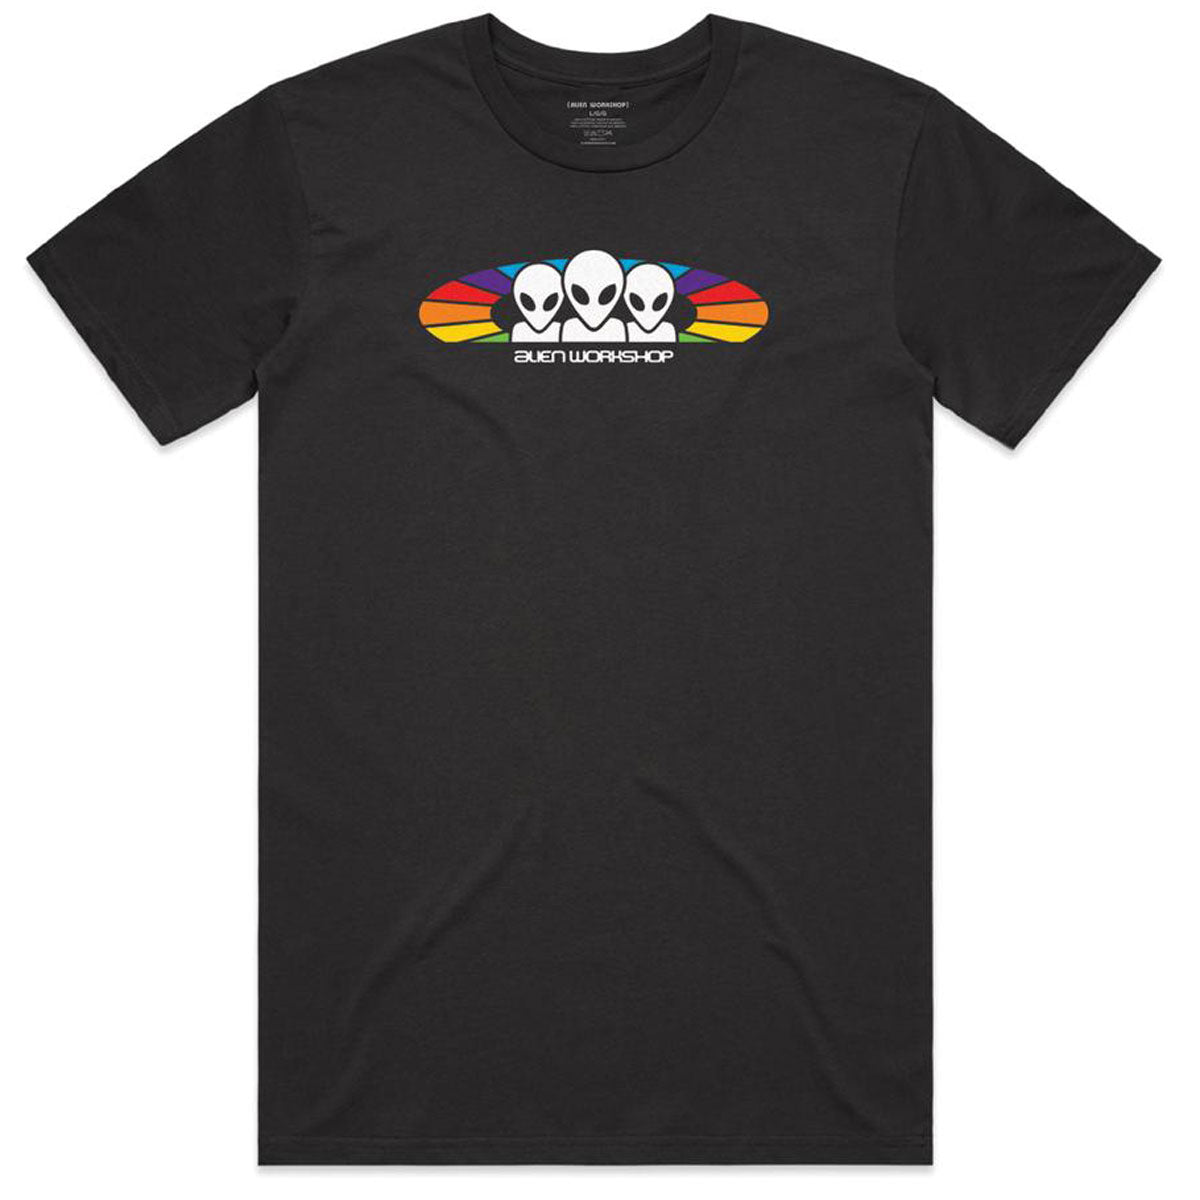 Alien Workshop Spectrum T-Shirt - Black image 1